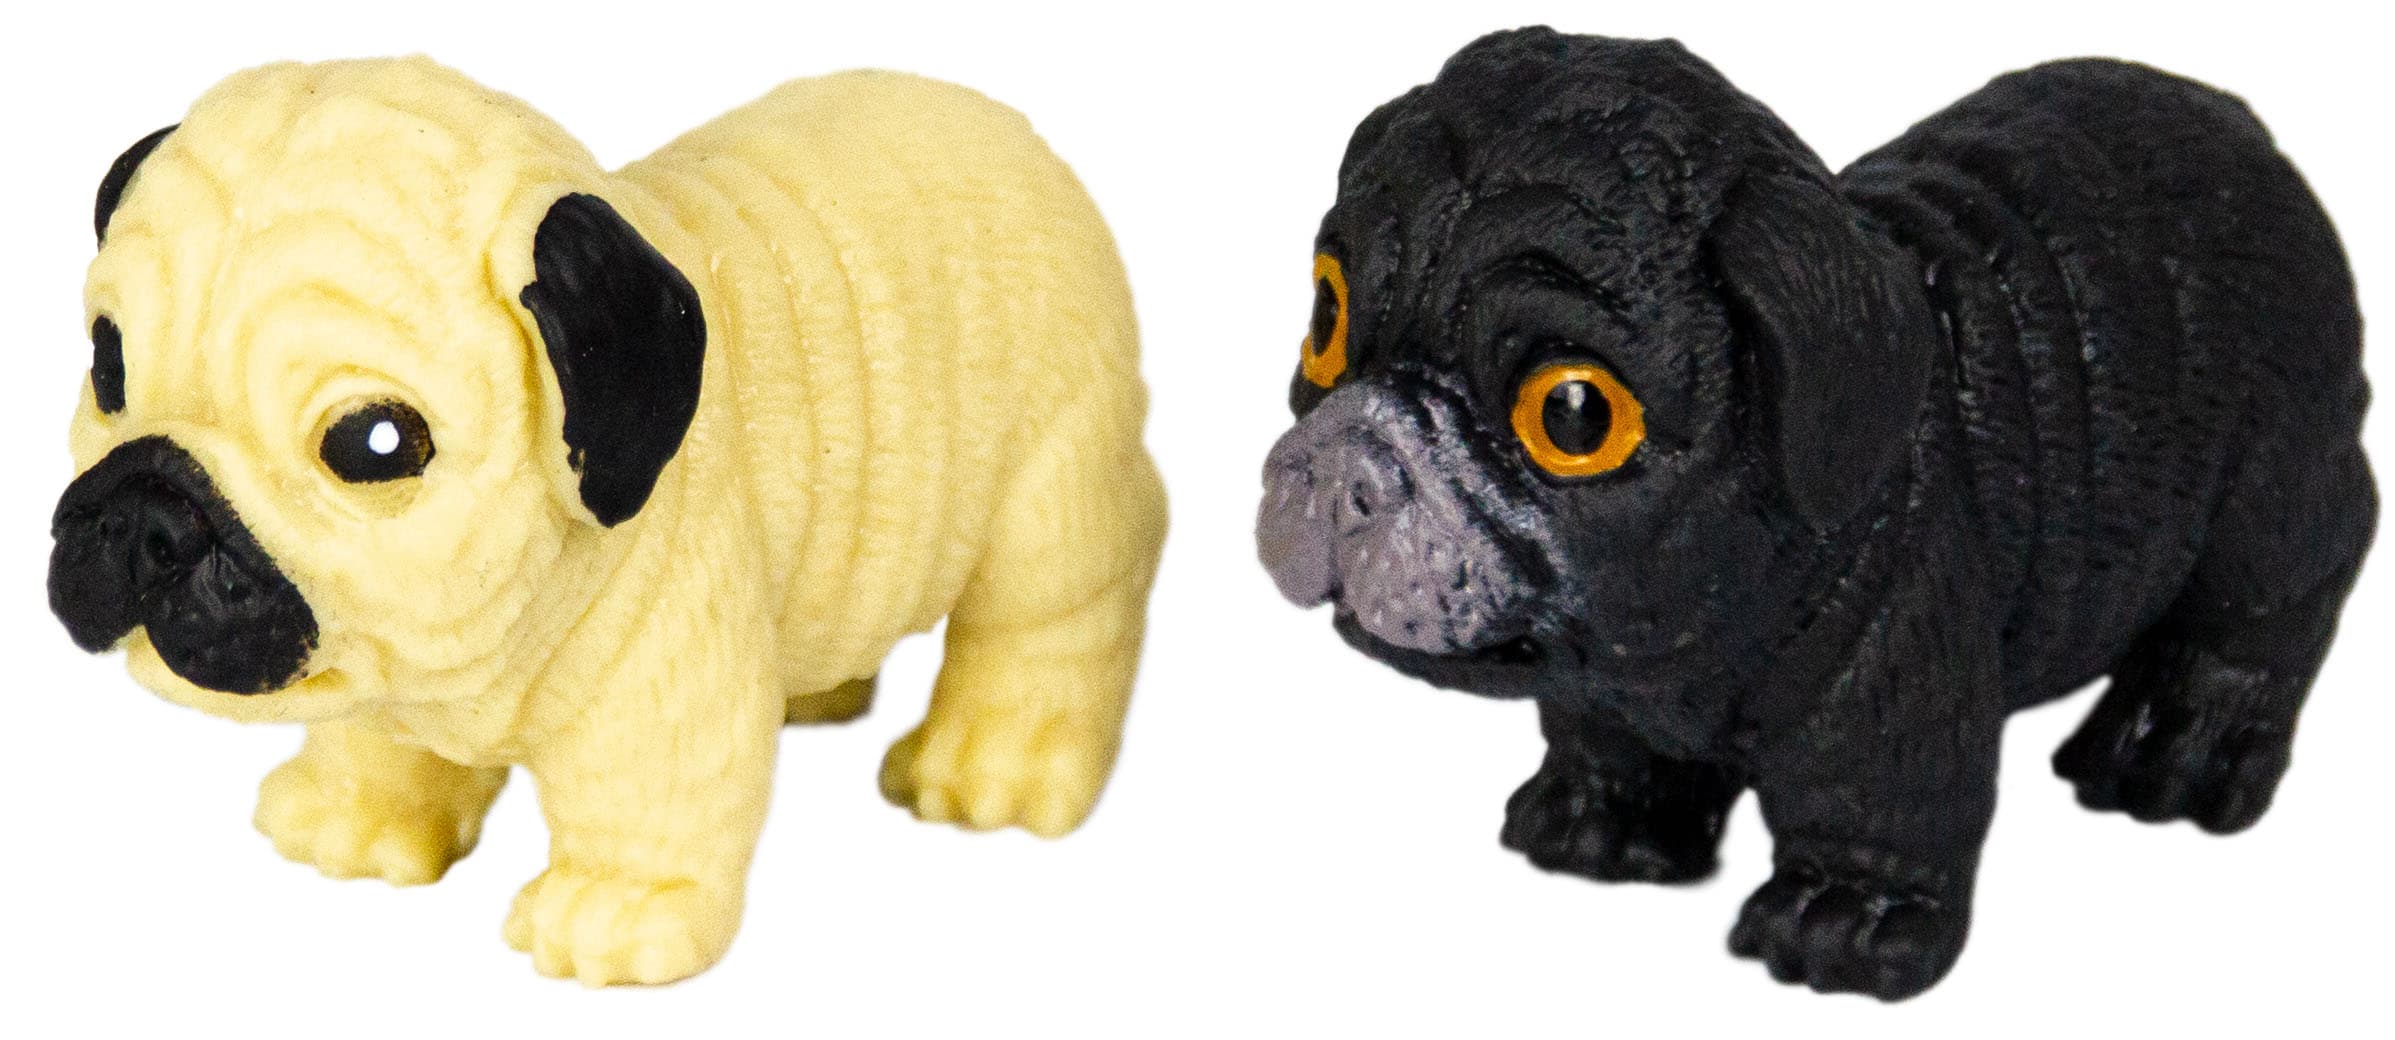 Игрушки резиновые фигурки-тянучки «Собаки Мопсы» A217-DB, 5 см., антистресс / 2 шт.